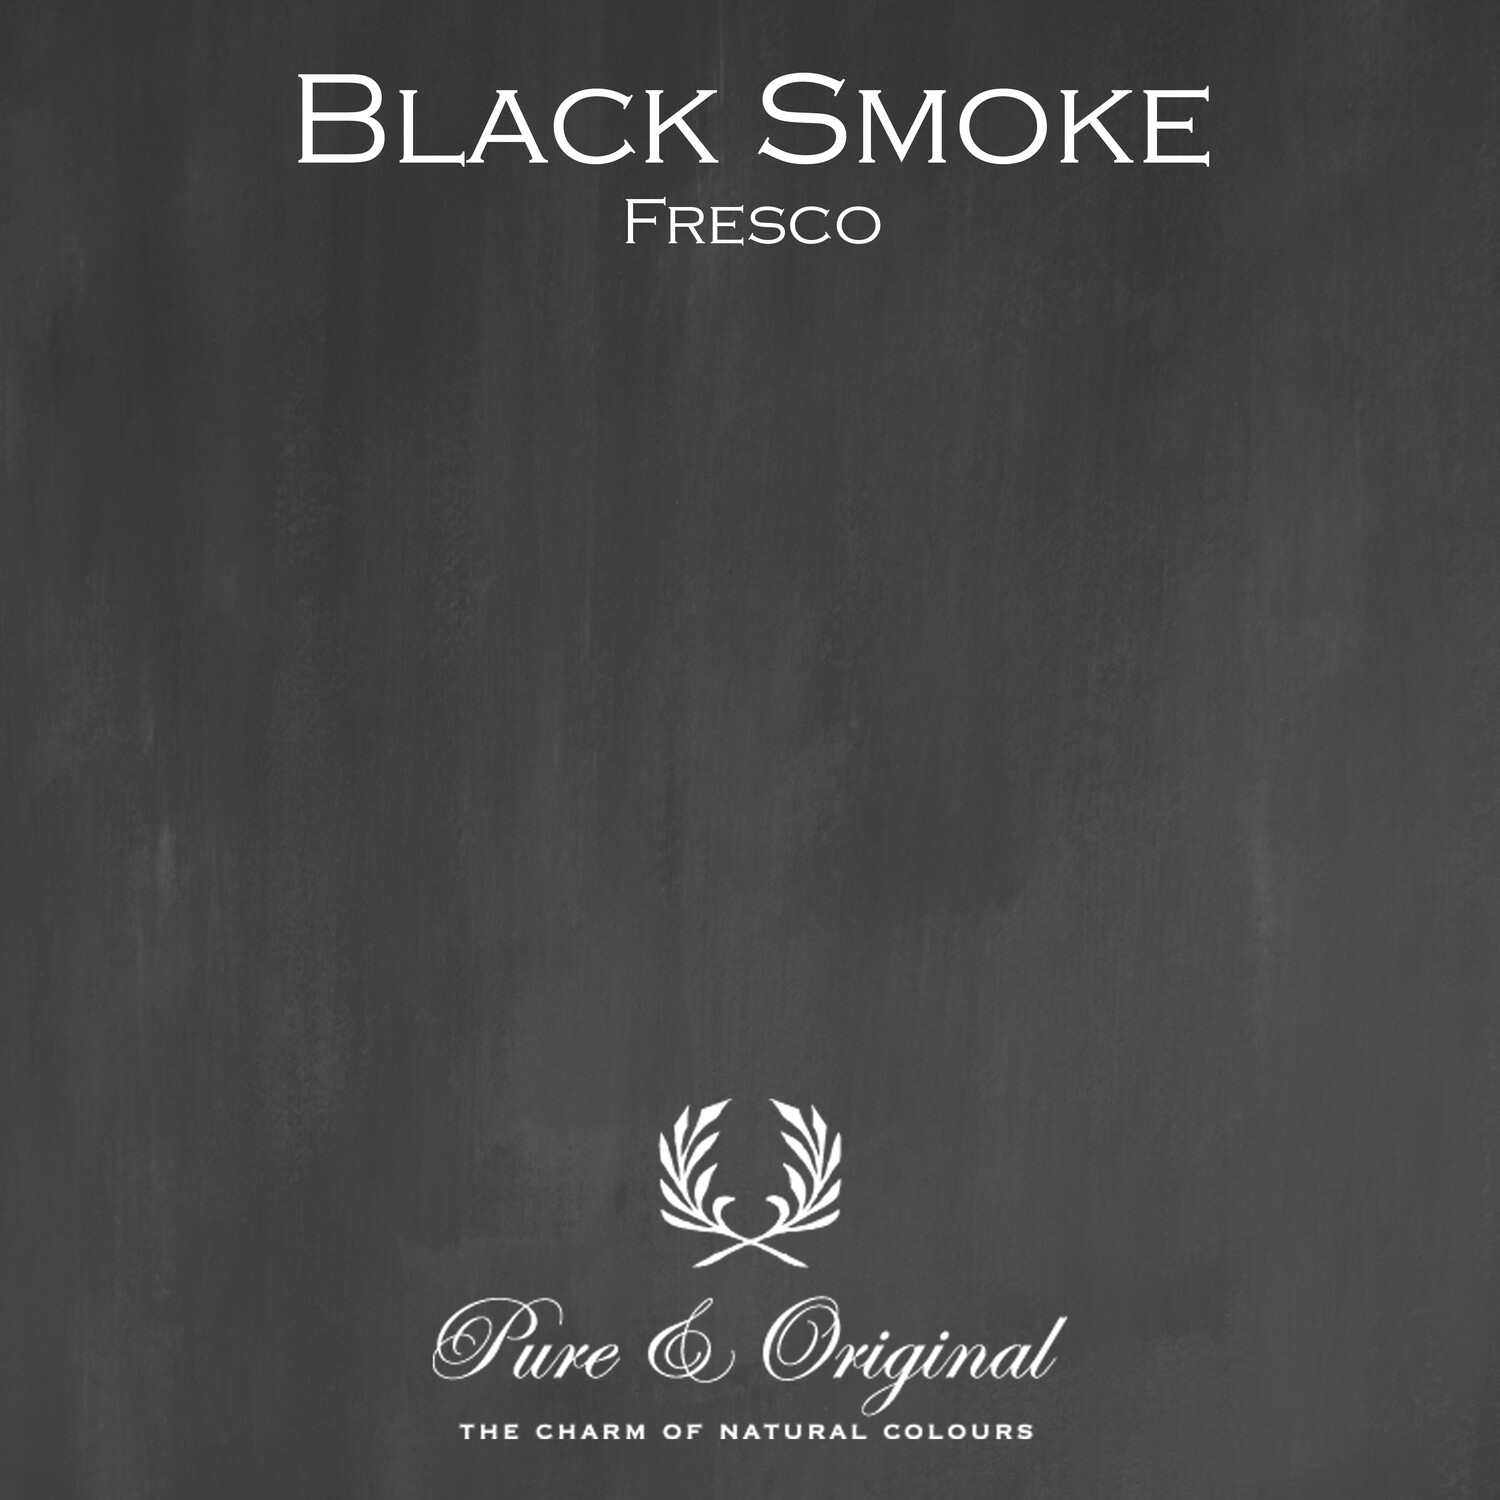 Black Smoke Fresco